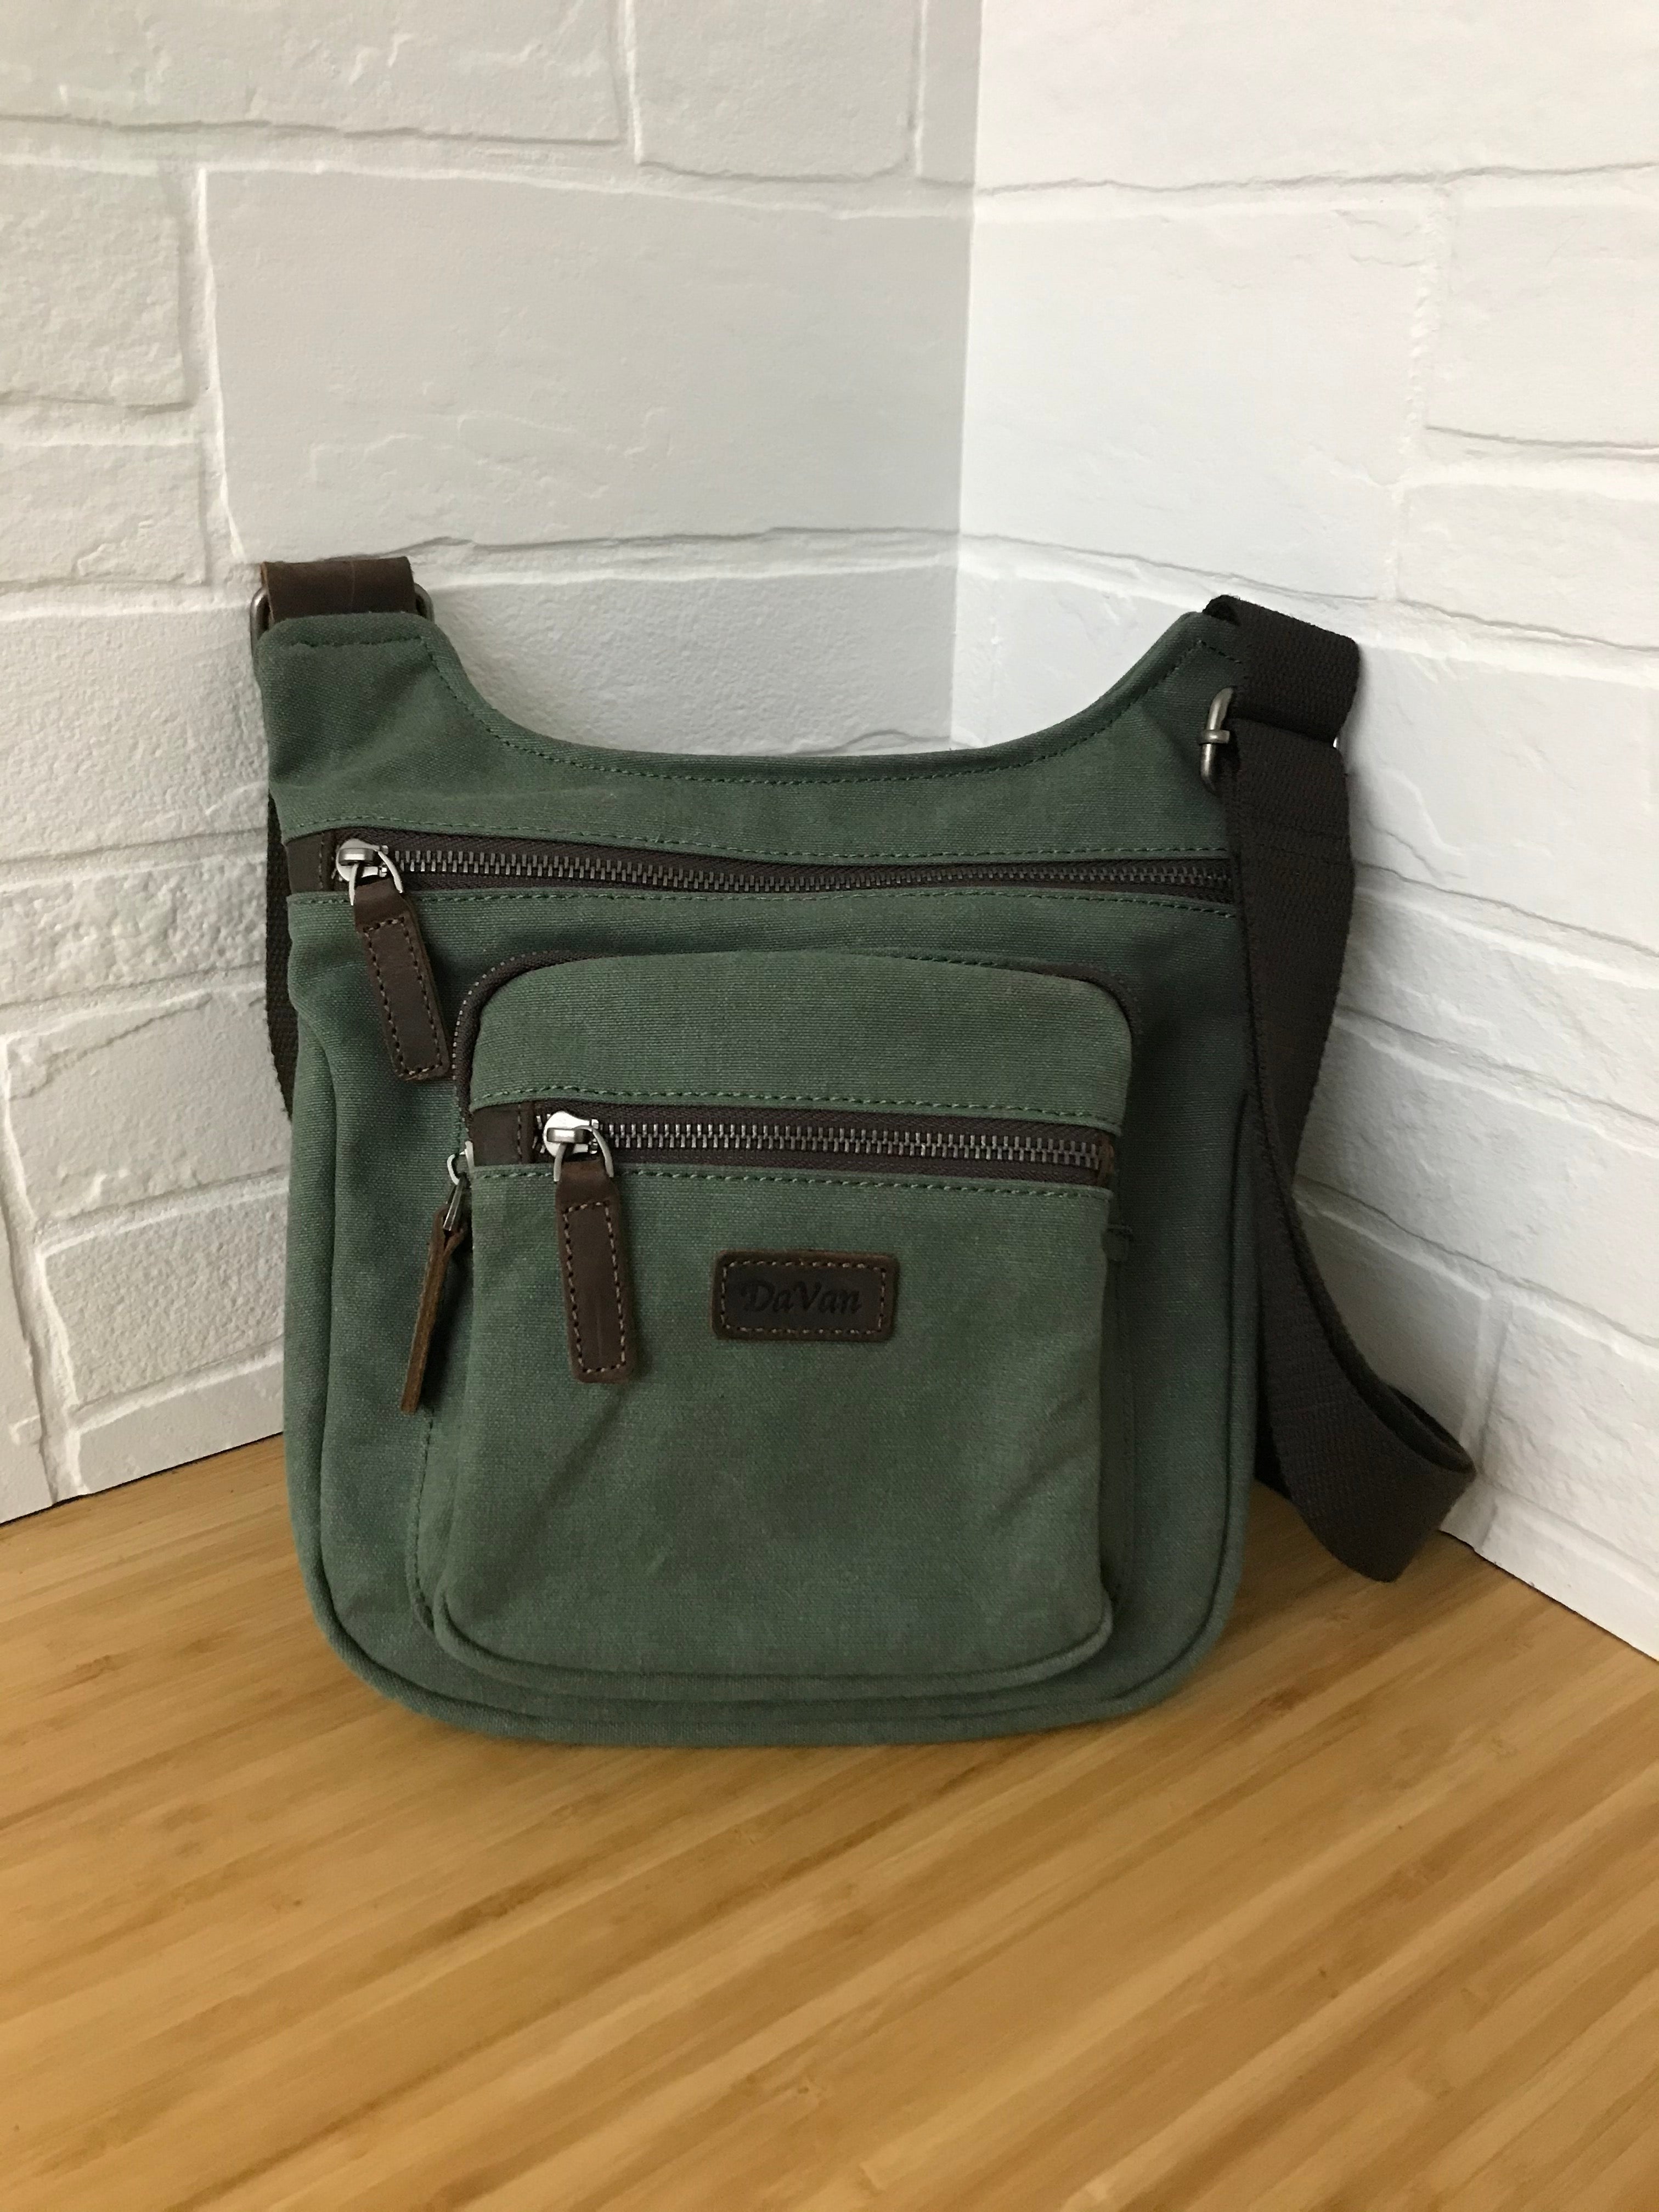 daVan shoulder bag - green